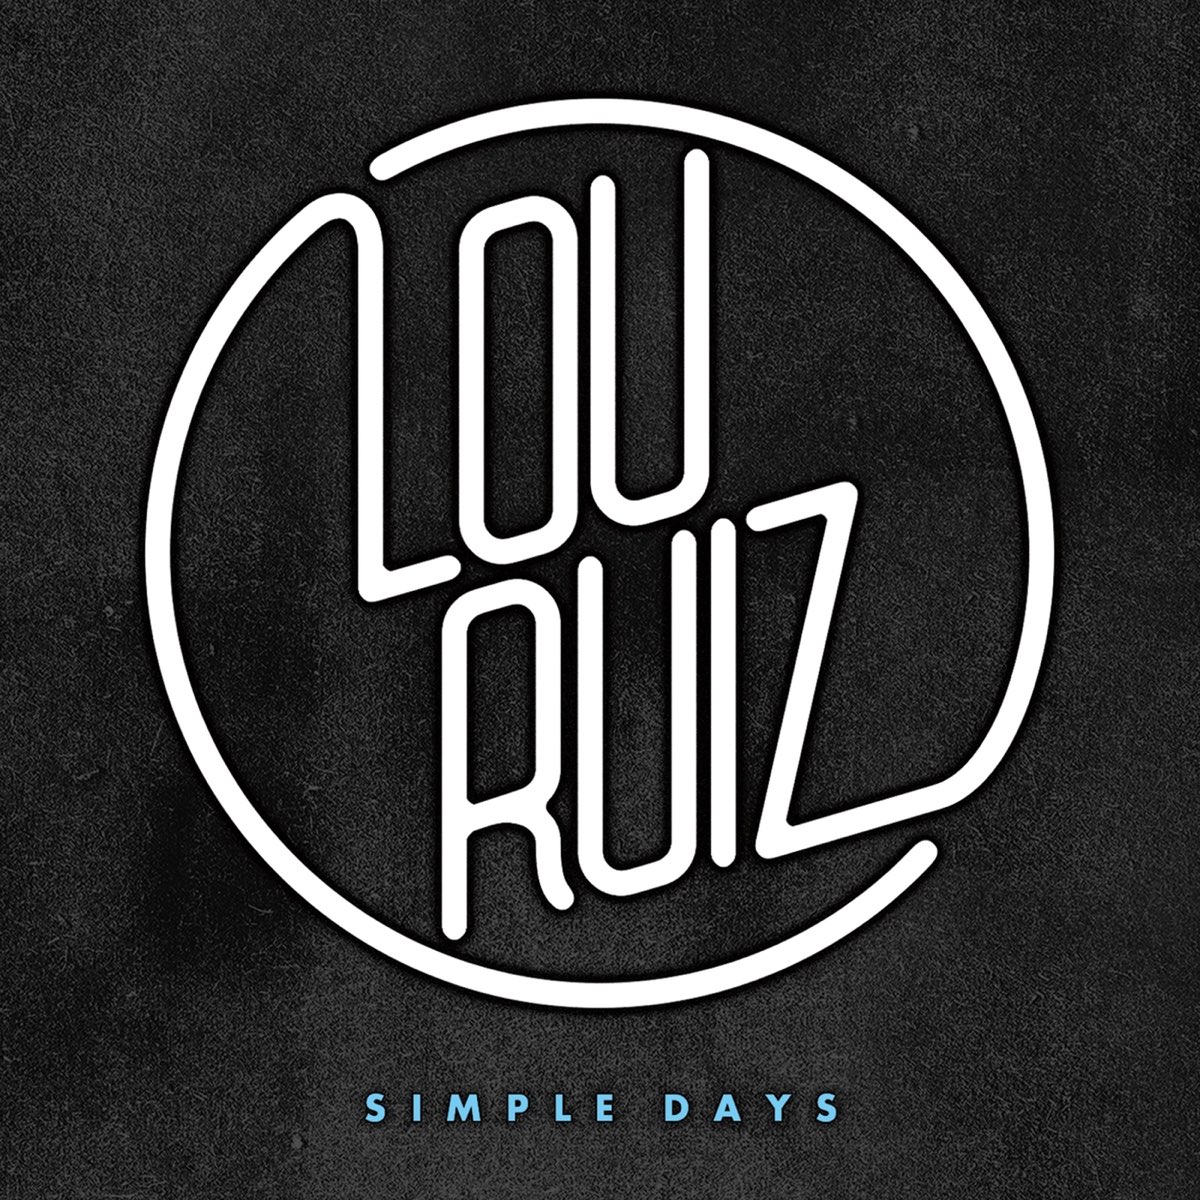 Lou песни. Simple Days. Simply days